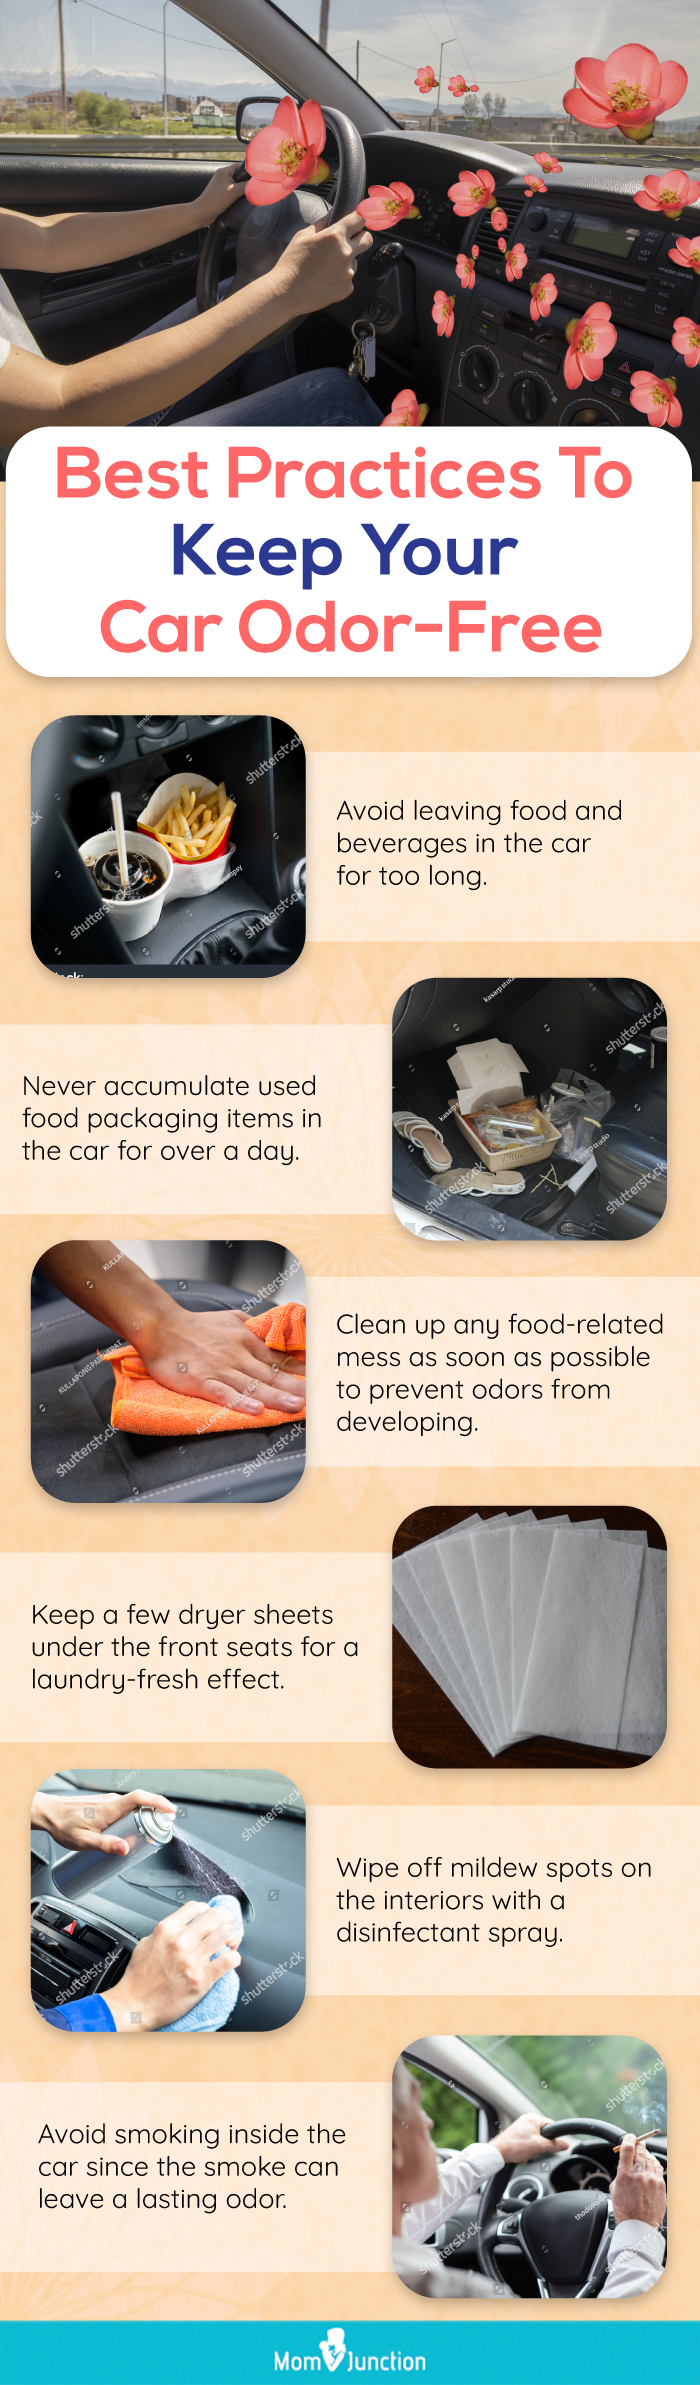 Best PracticesToKeep Your Car Odor Free (infographic)